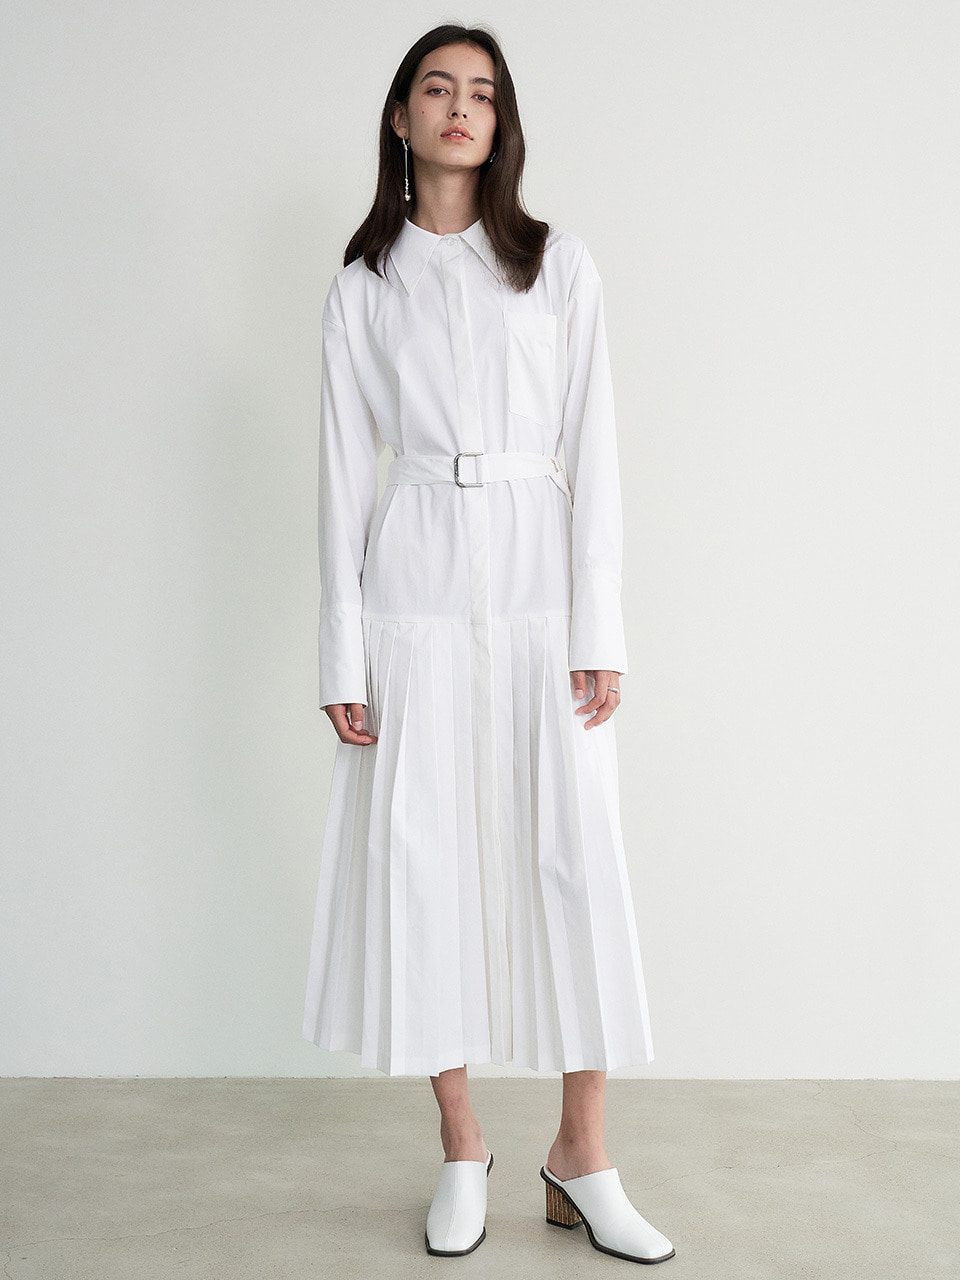 004 Pleated Cotton White Shirt Dress